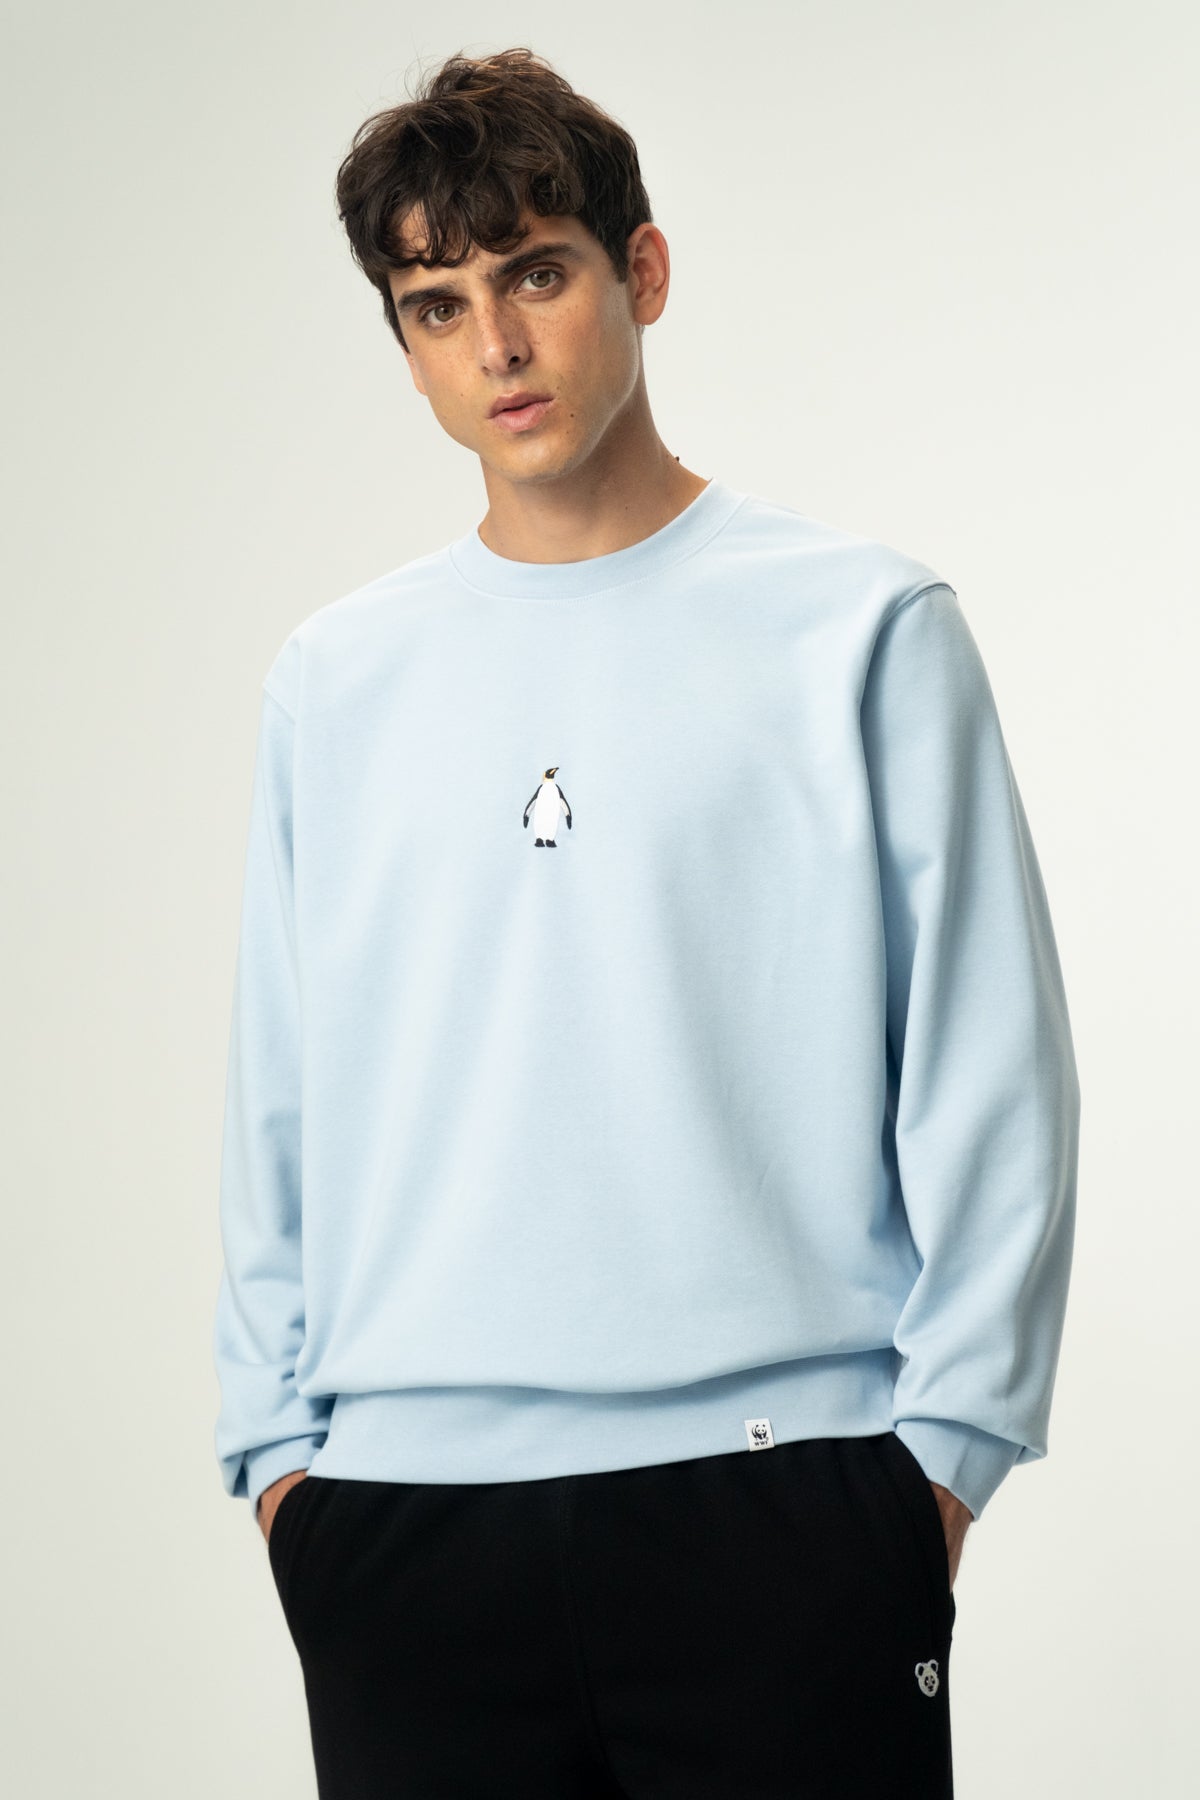 İmparator Penguen Soft Fleece Sweatshirt - Açık Mavi